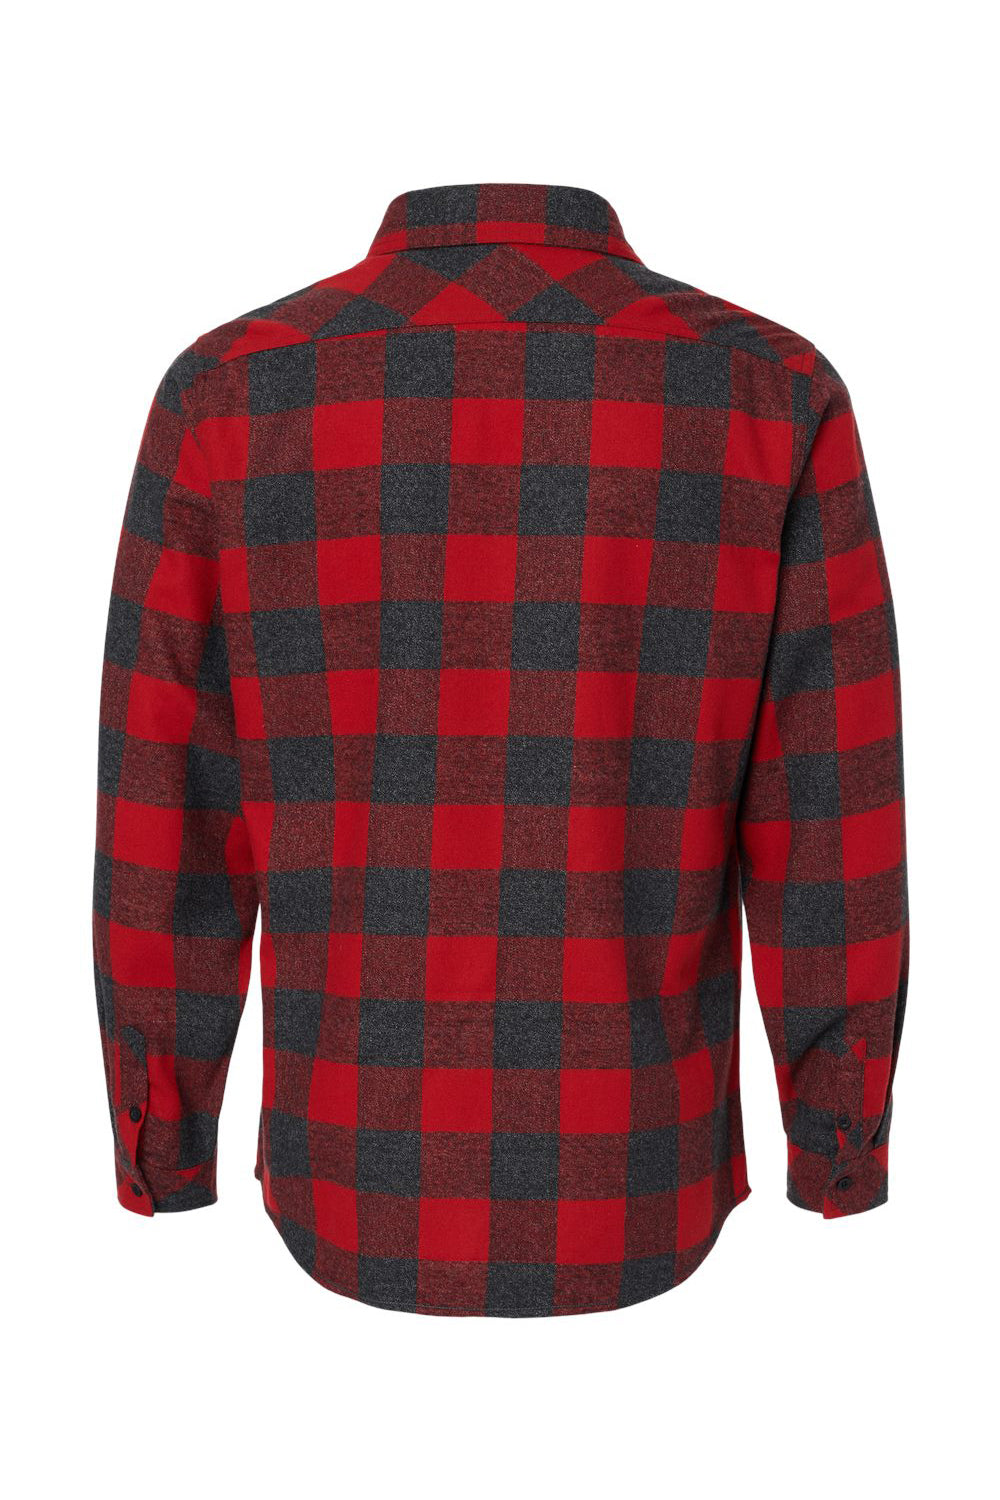 Burnside B8212 Mens Flannel Long Sleeve Button Down Shirt w/ Pocket Red/Heather Black Flat Back